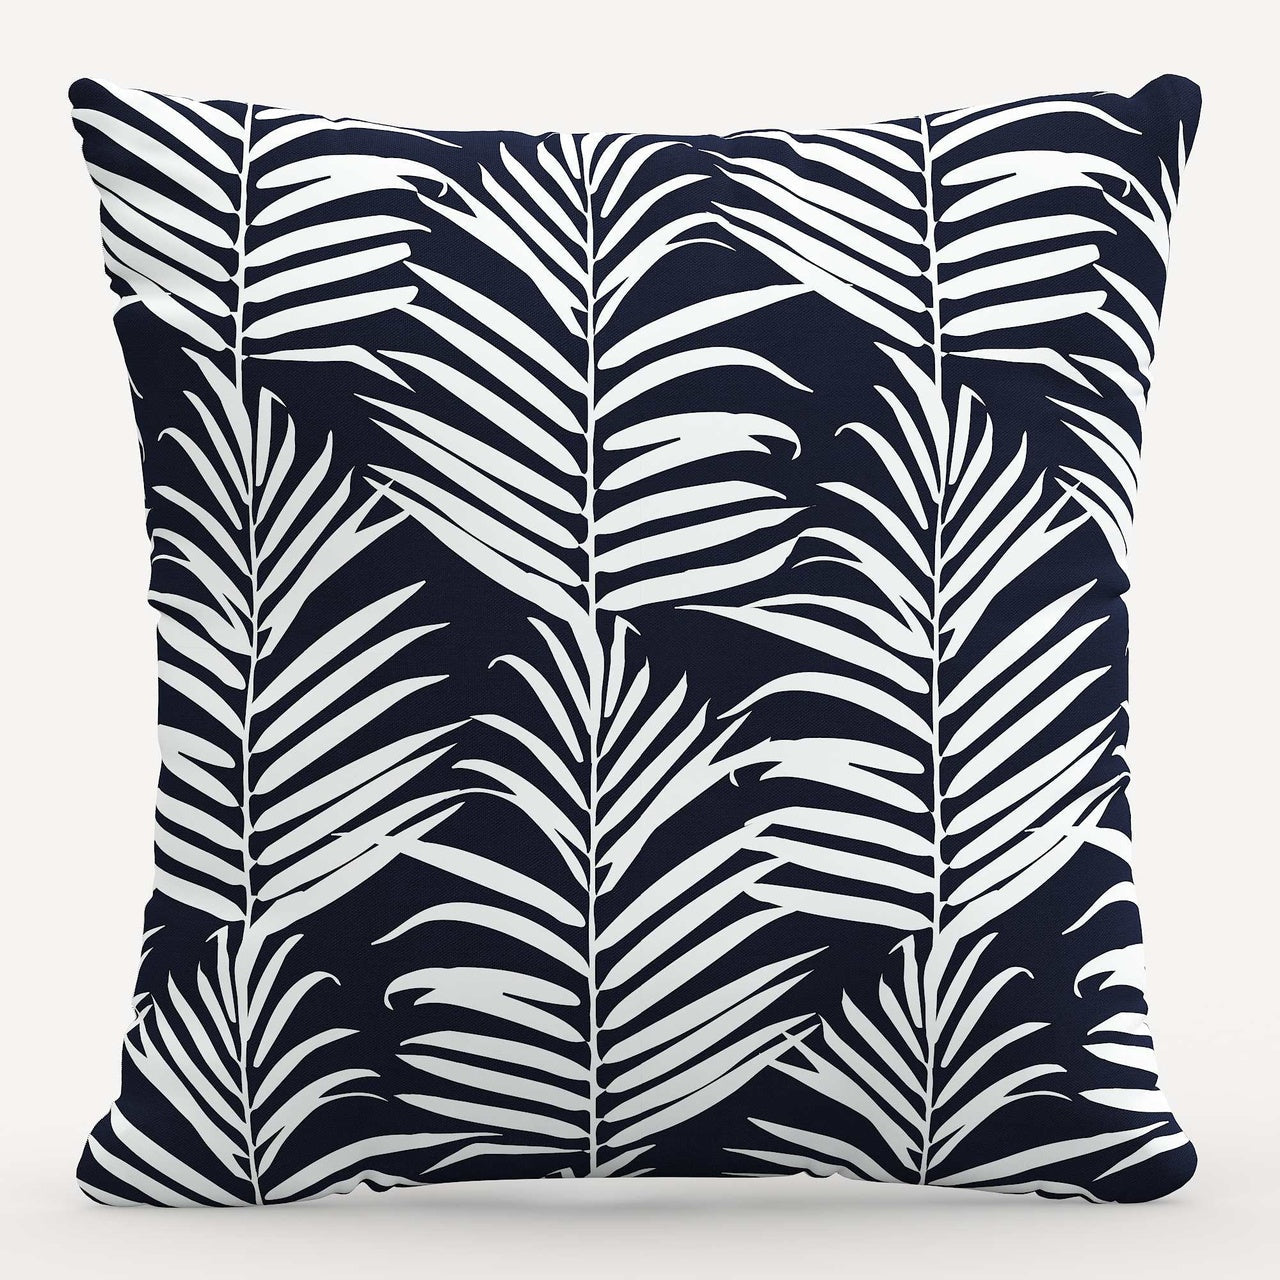 Cloth & Company Decorative Pillow